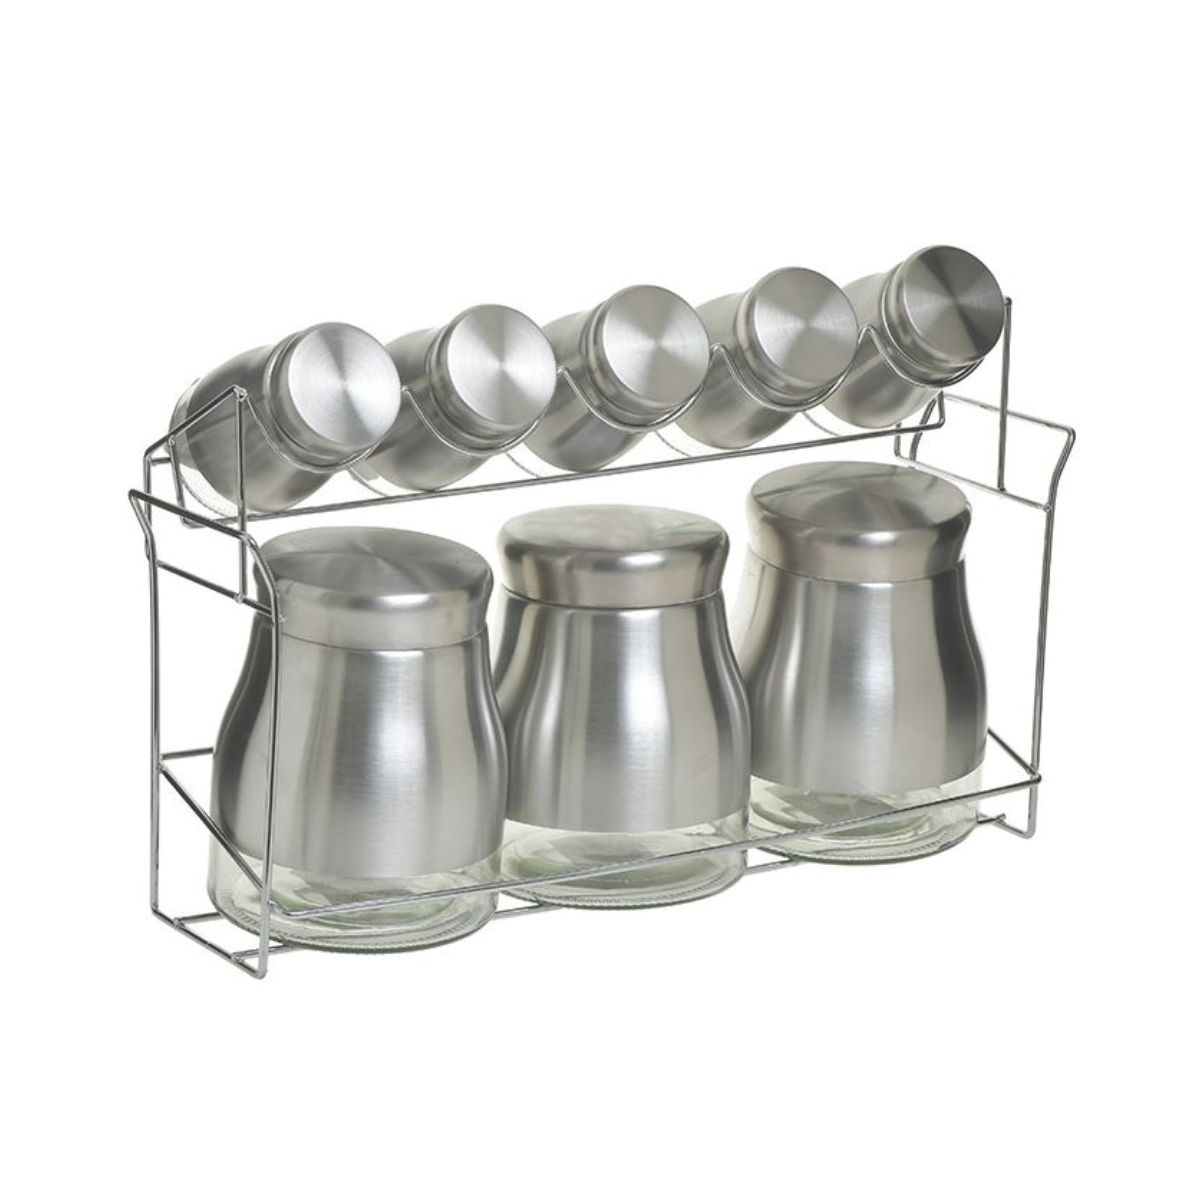 Bucatarie - Set pentru condimente 8 recipiente argintiu din inox cu suport Inart, hectarul.ro